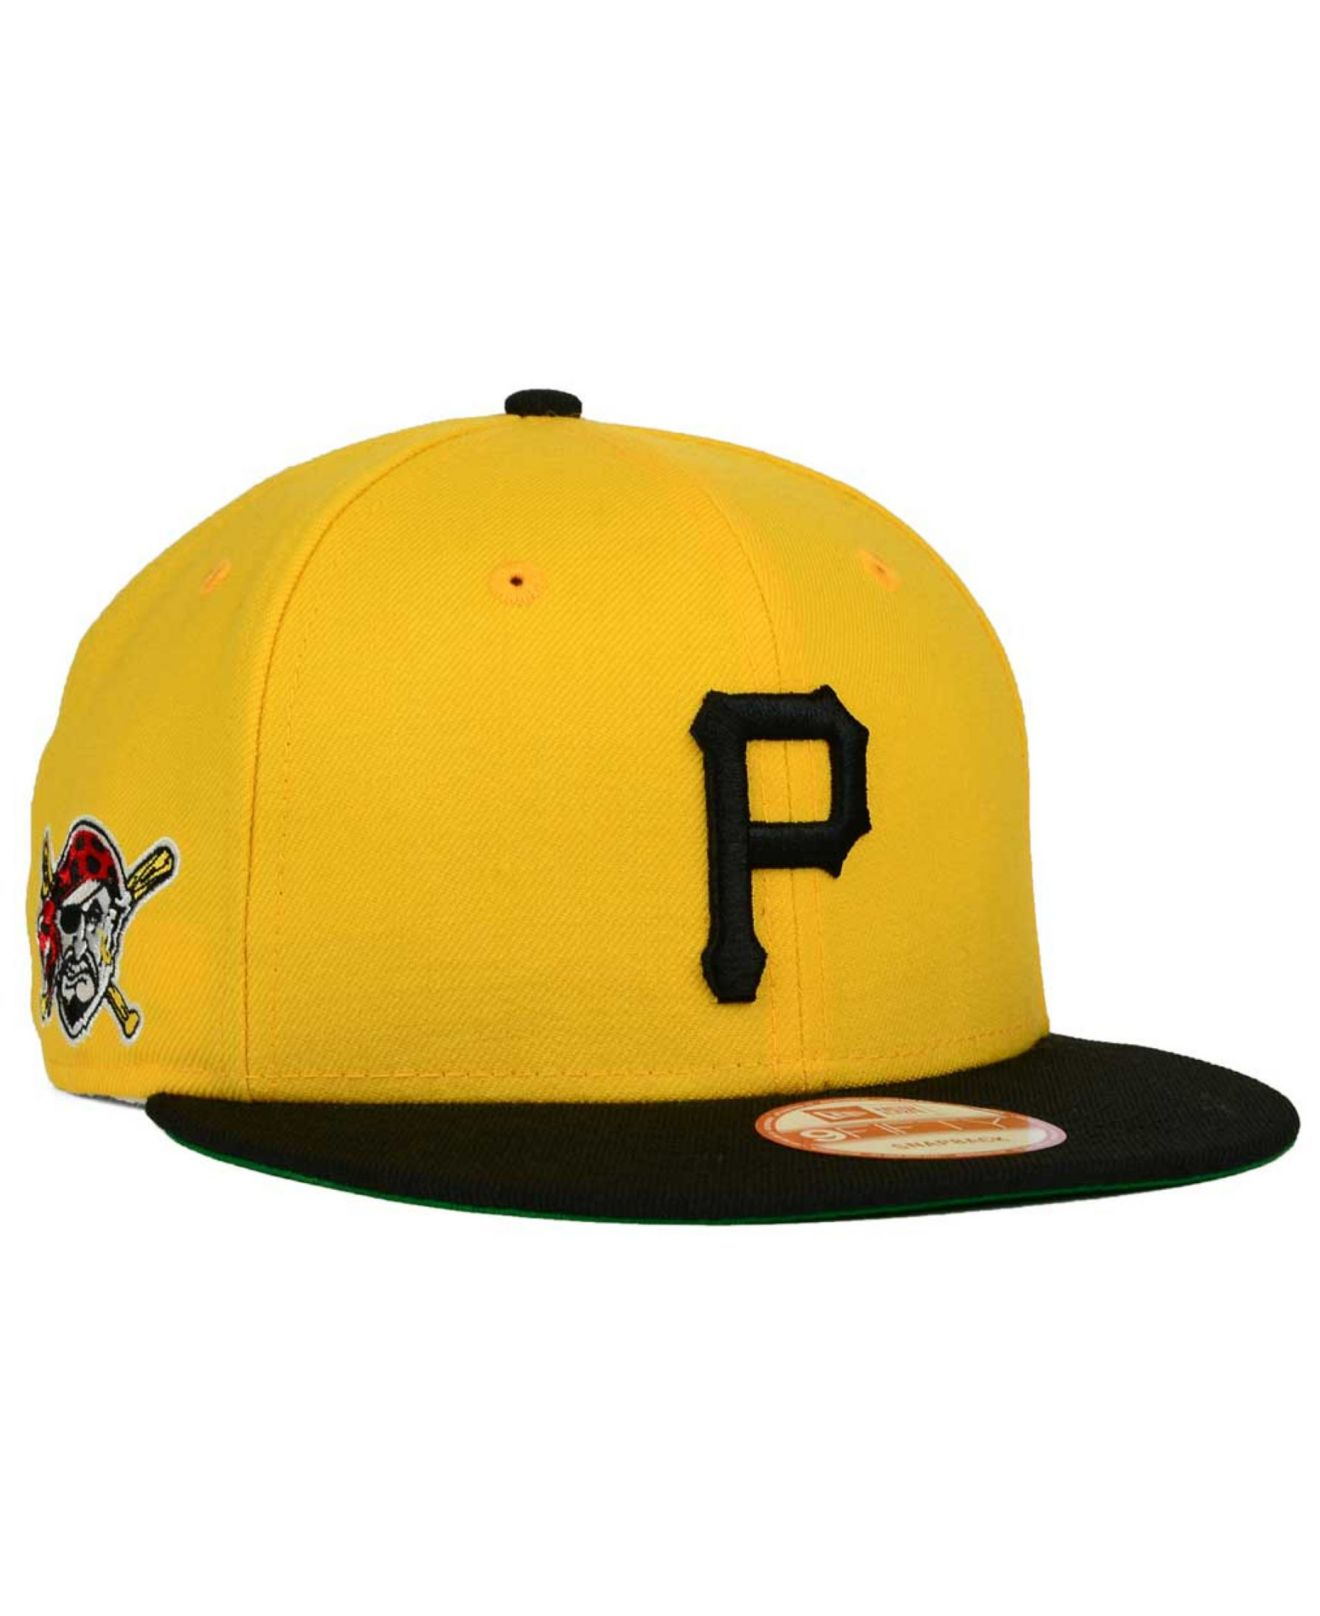 Pittsburgh Pirates New Era Flawless 9FIFTY Snapback Hat - Black/Gold